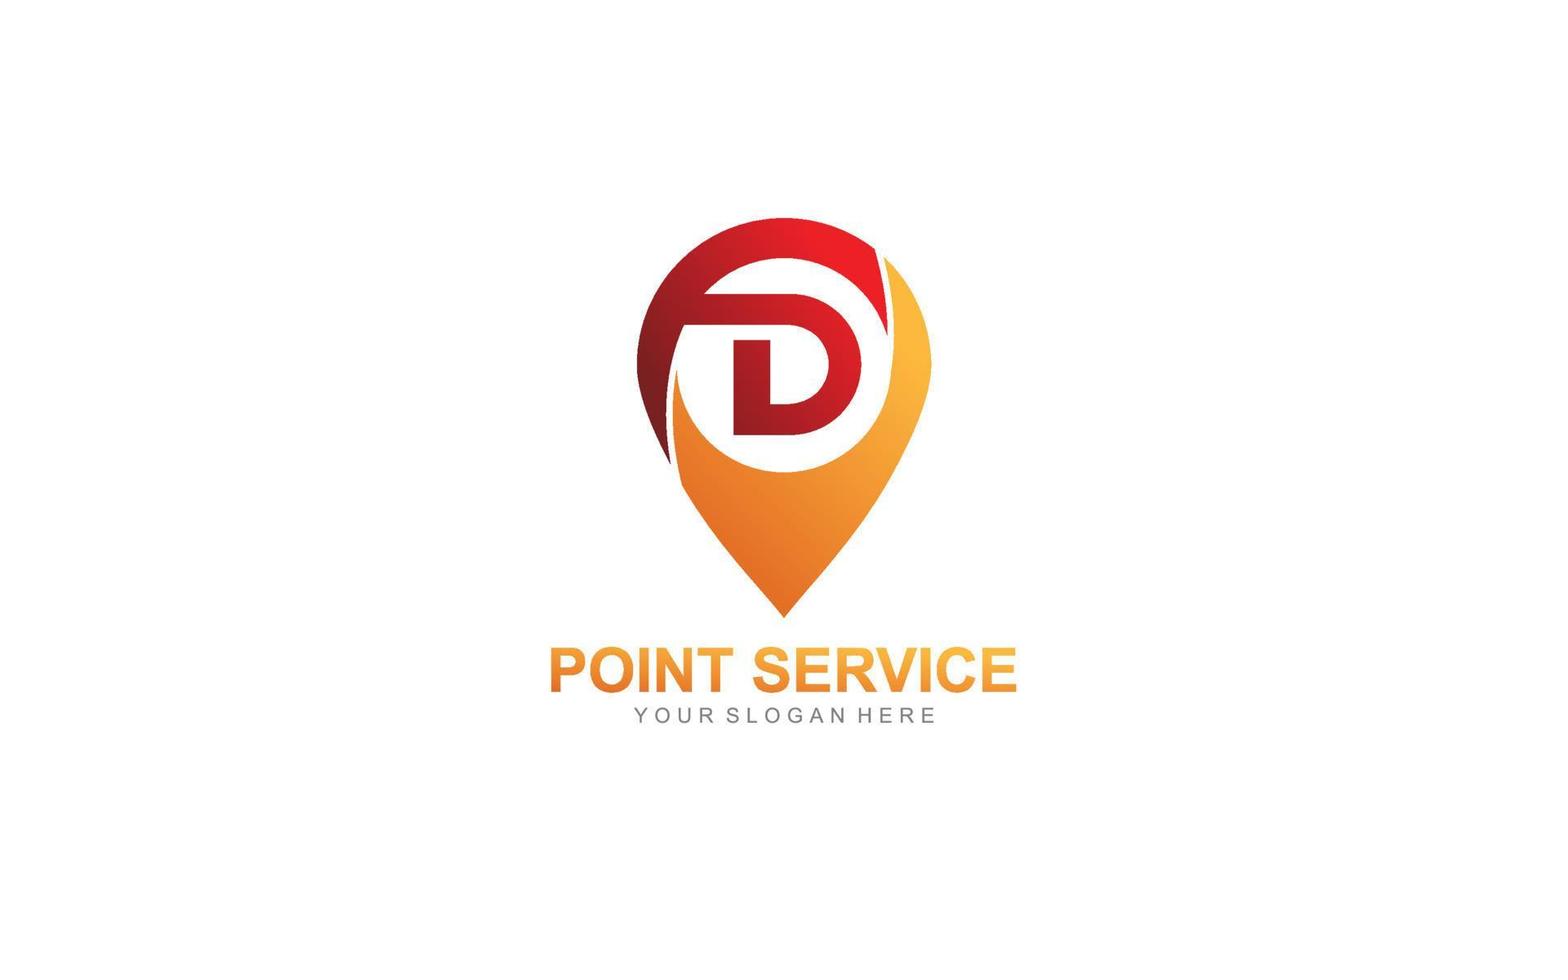 D point logo design inspiration. Vector letter template design for brand.